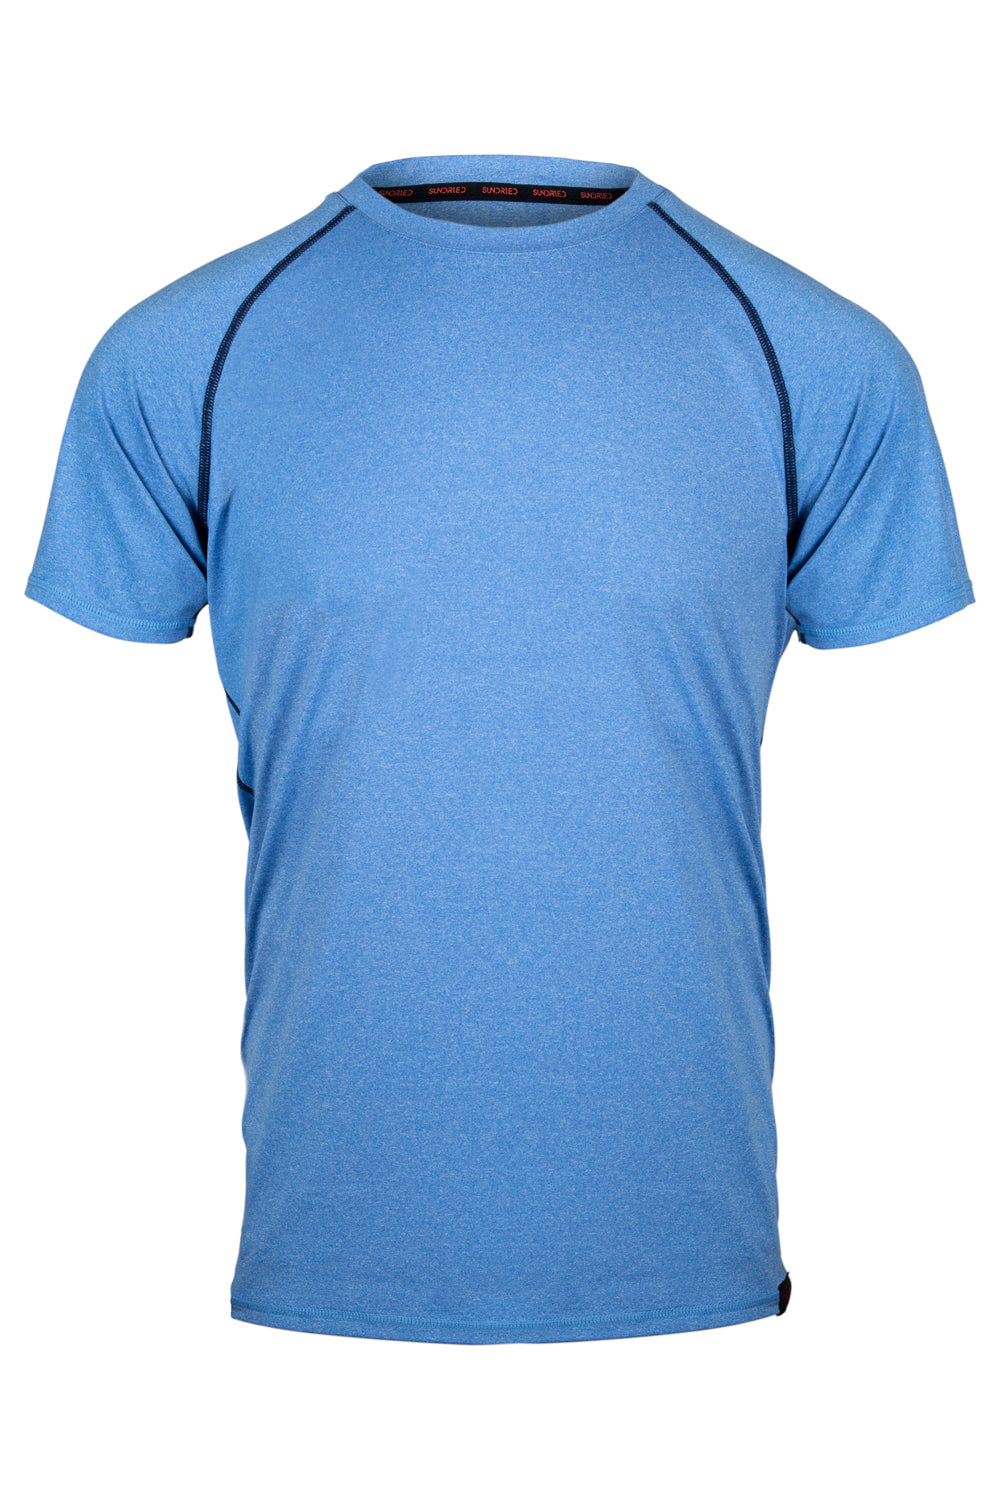 Sundried Eiger Men's Training T-Shirt